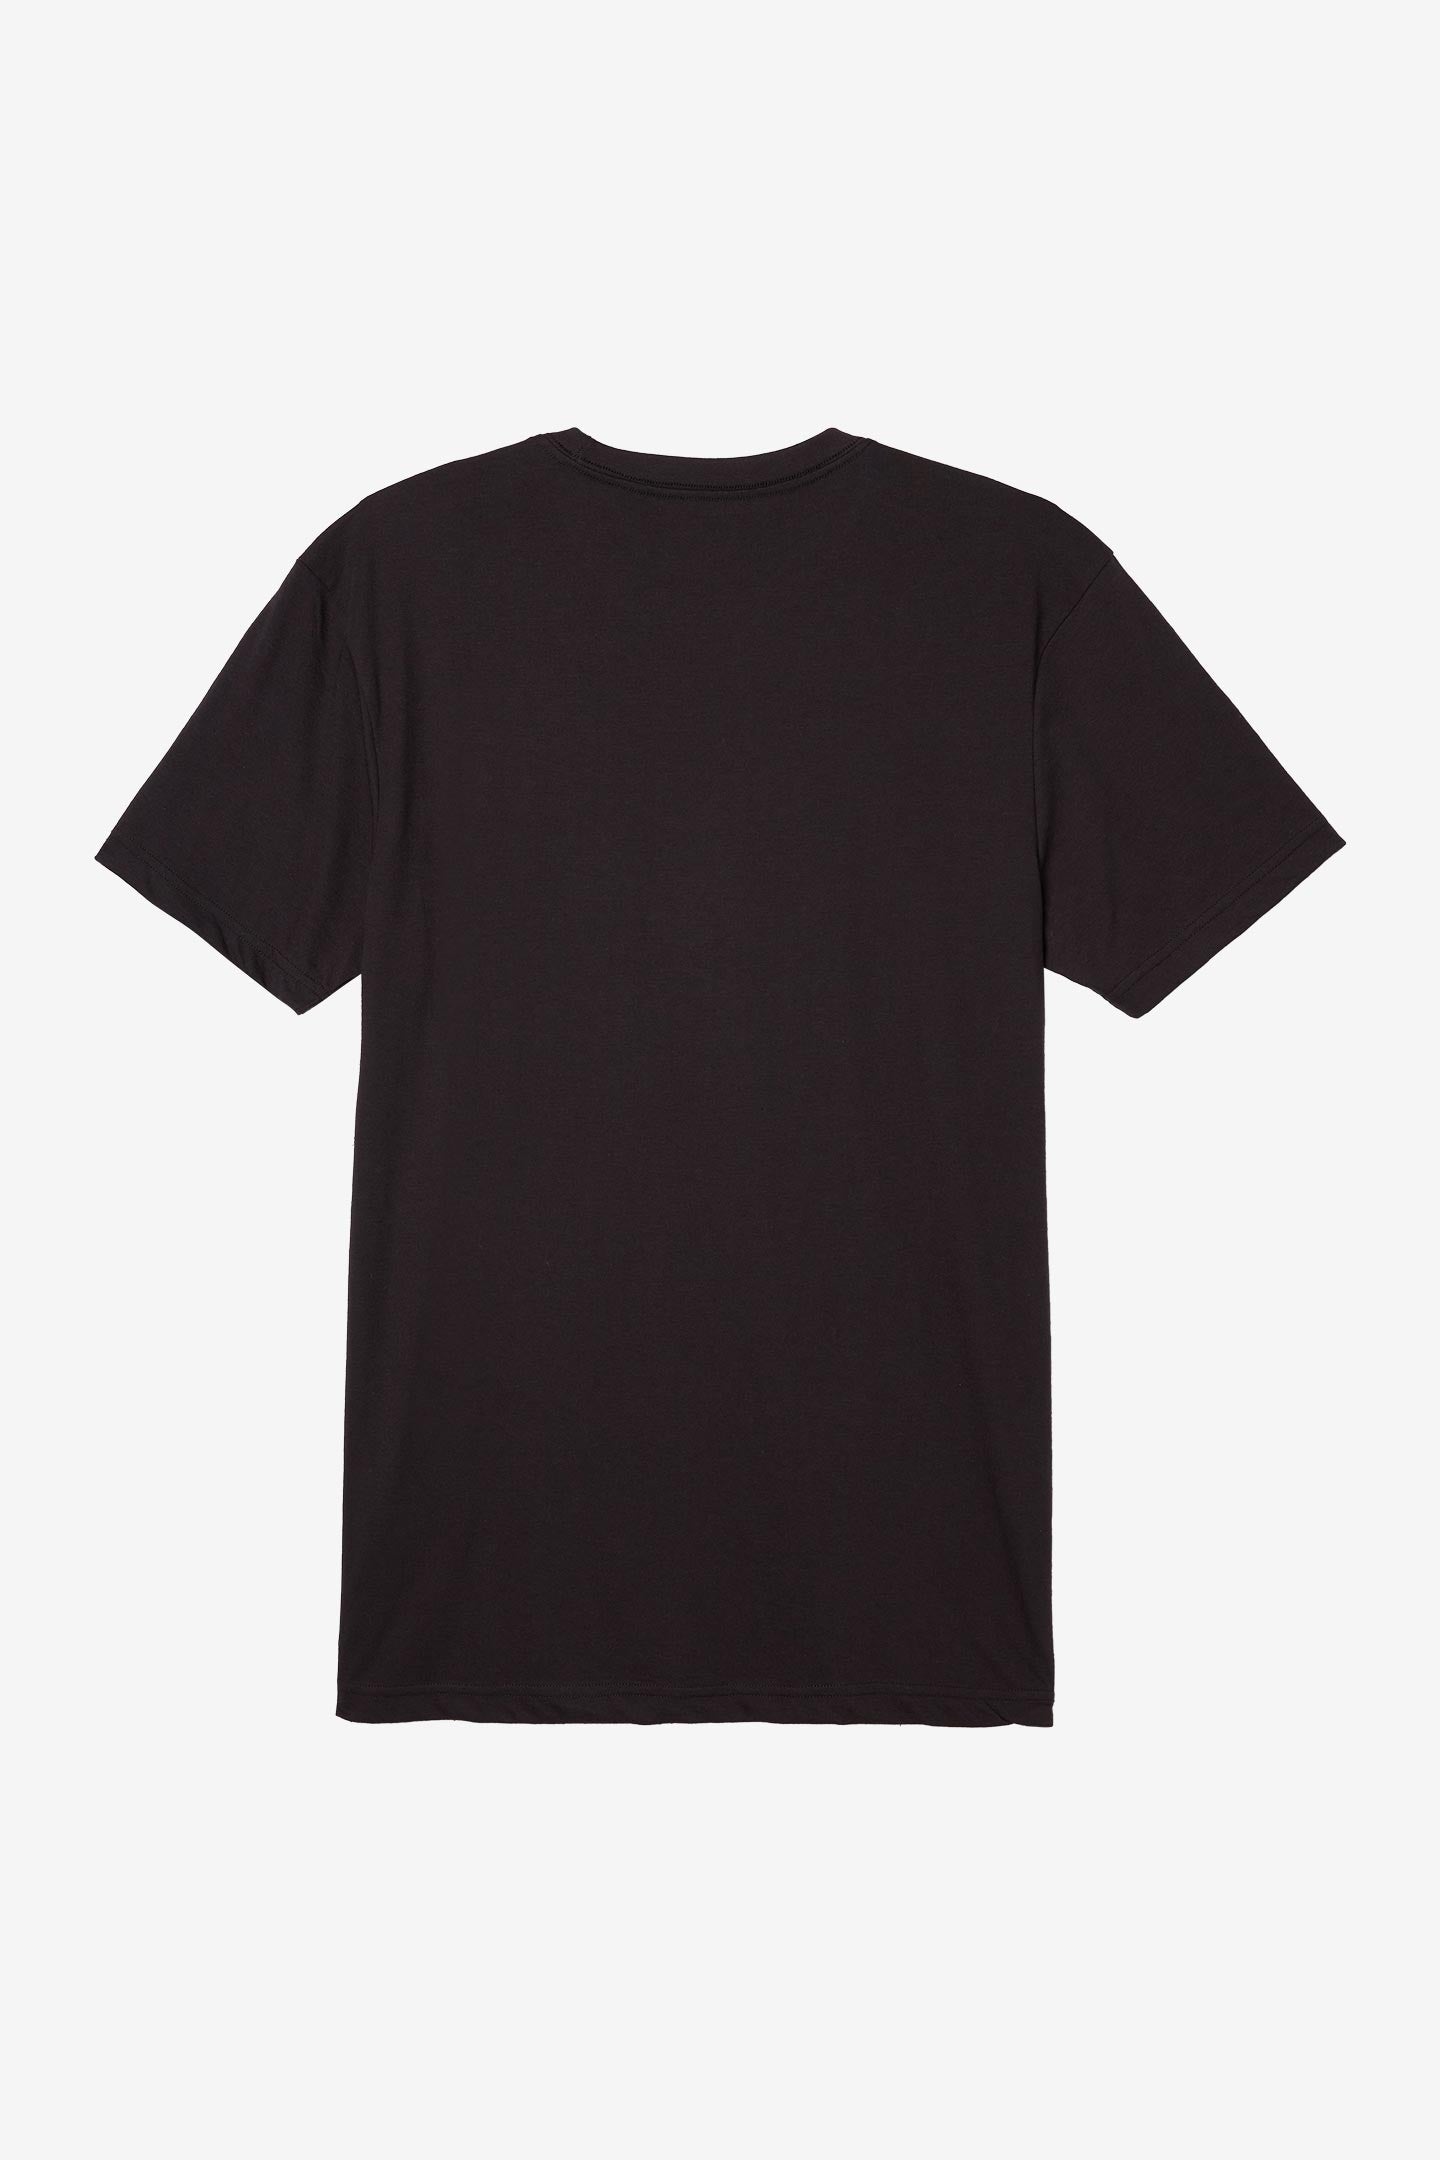 TRVLR Cossa Staple T-Shirt - Black